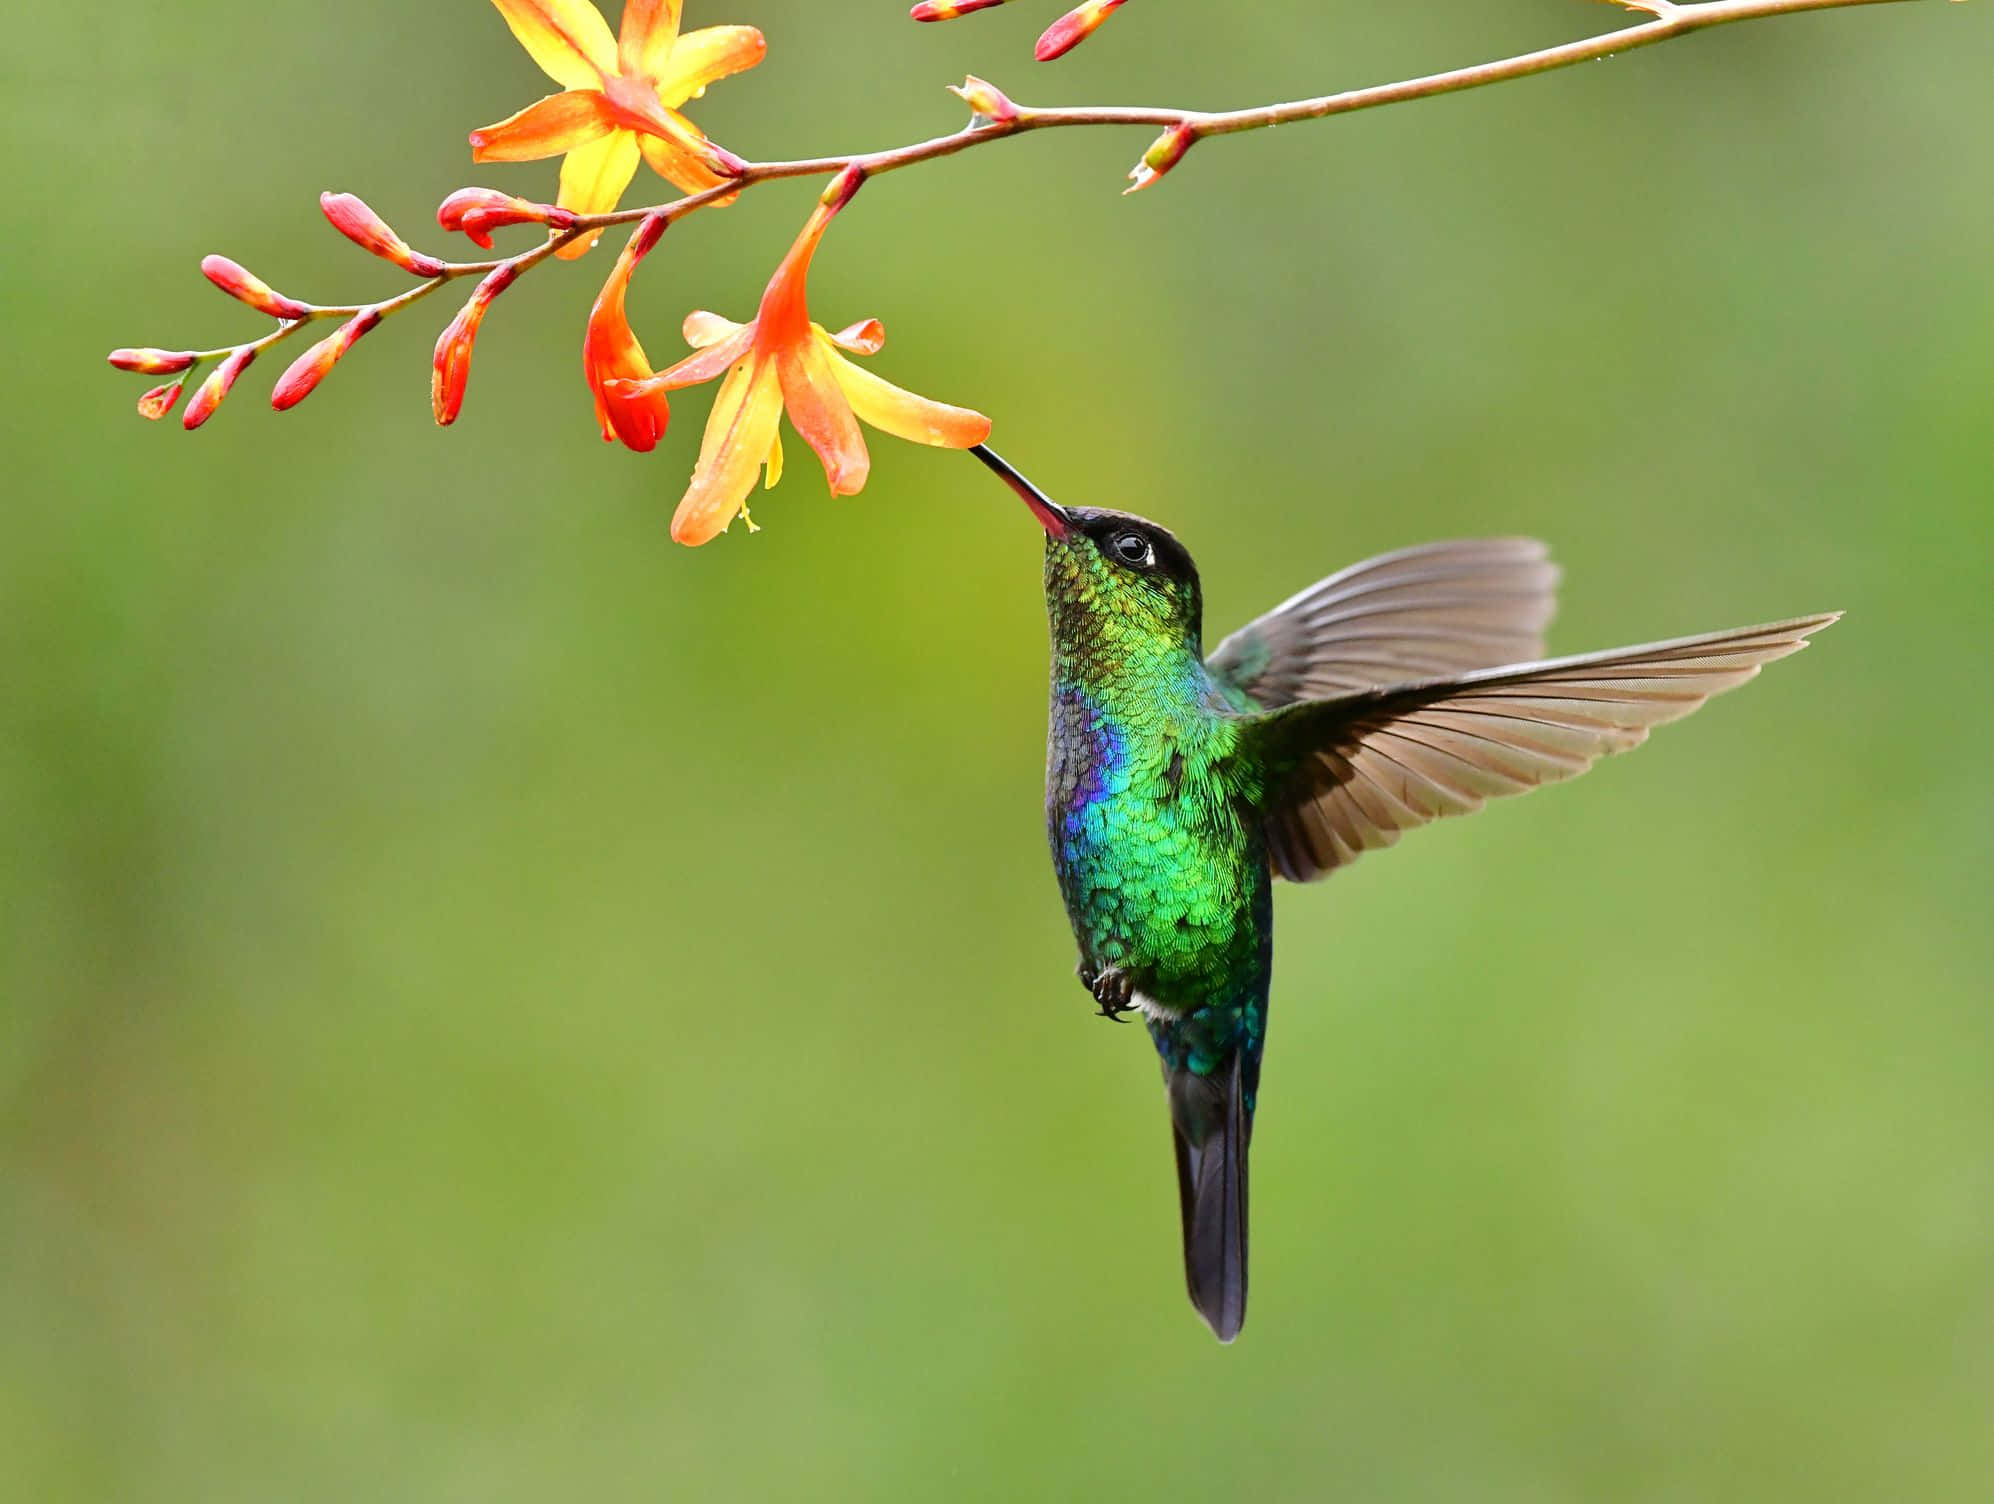 Download Hummingbird Pictures | Wallpapers.com